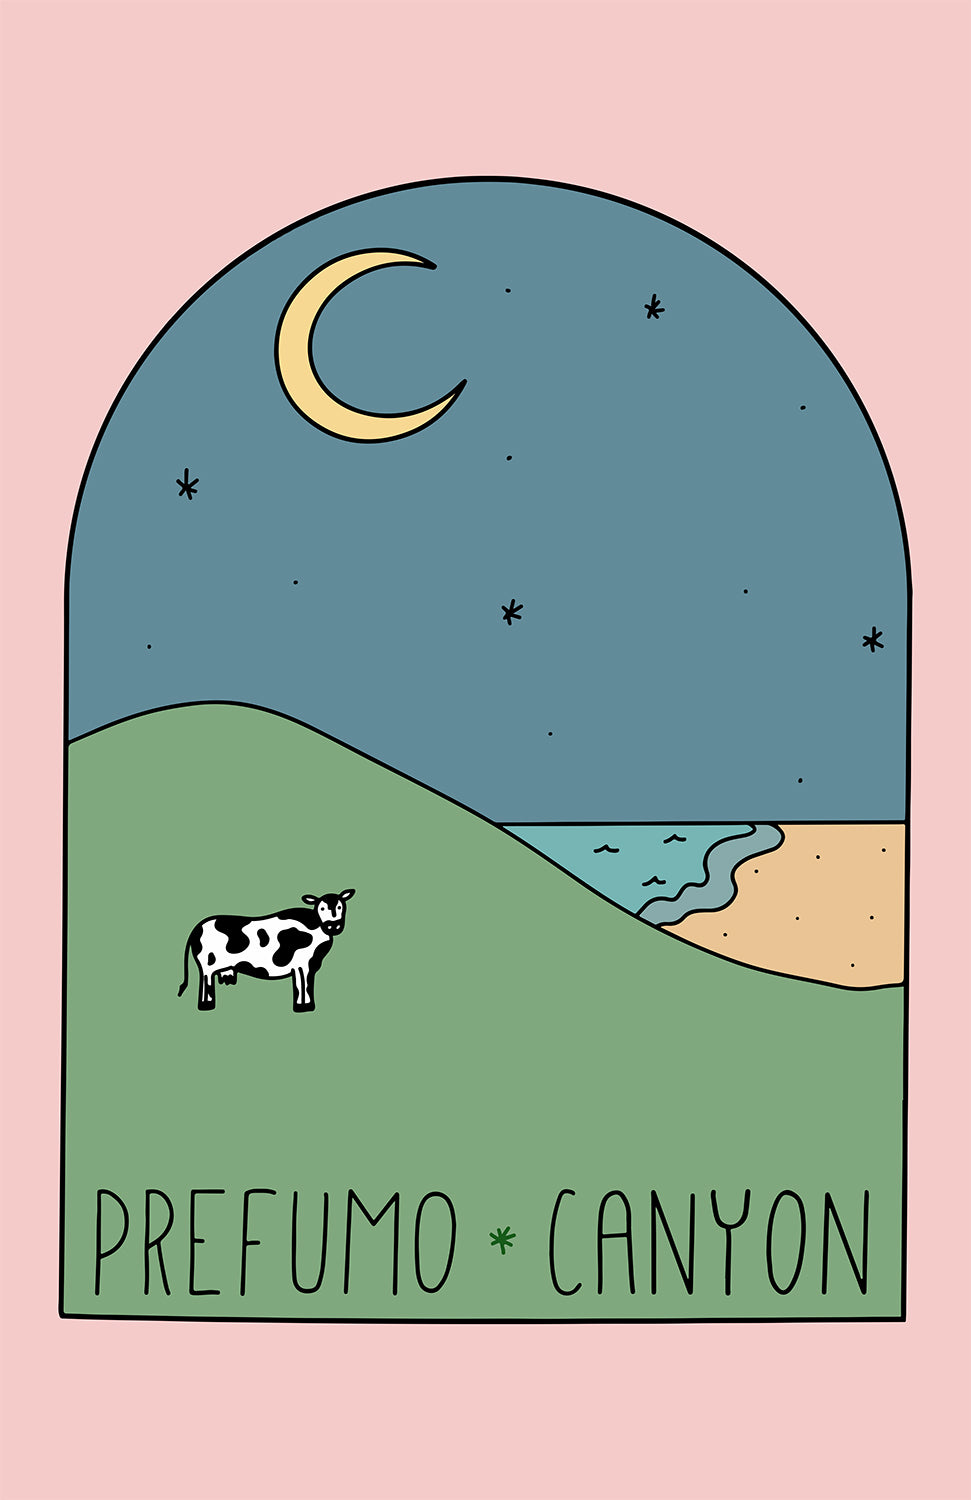 PREFUMO CANYON